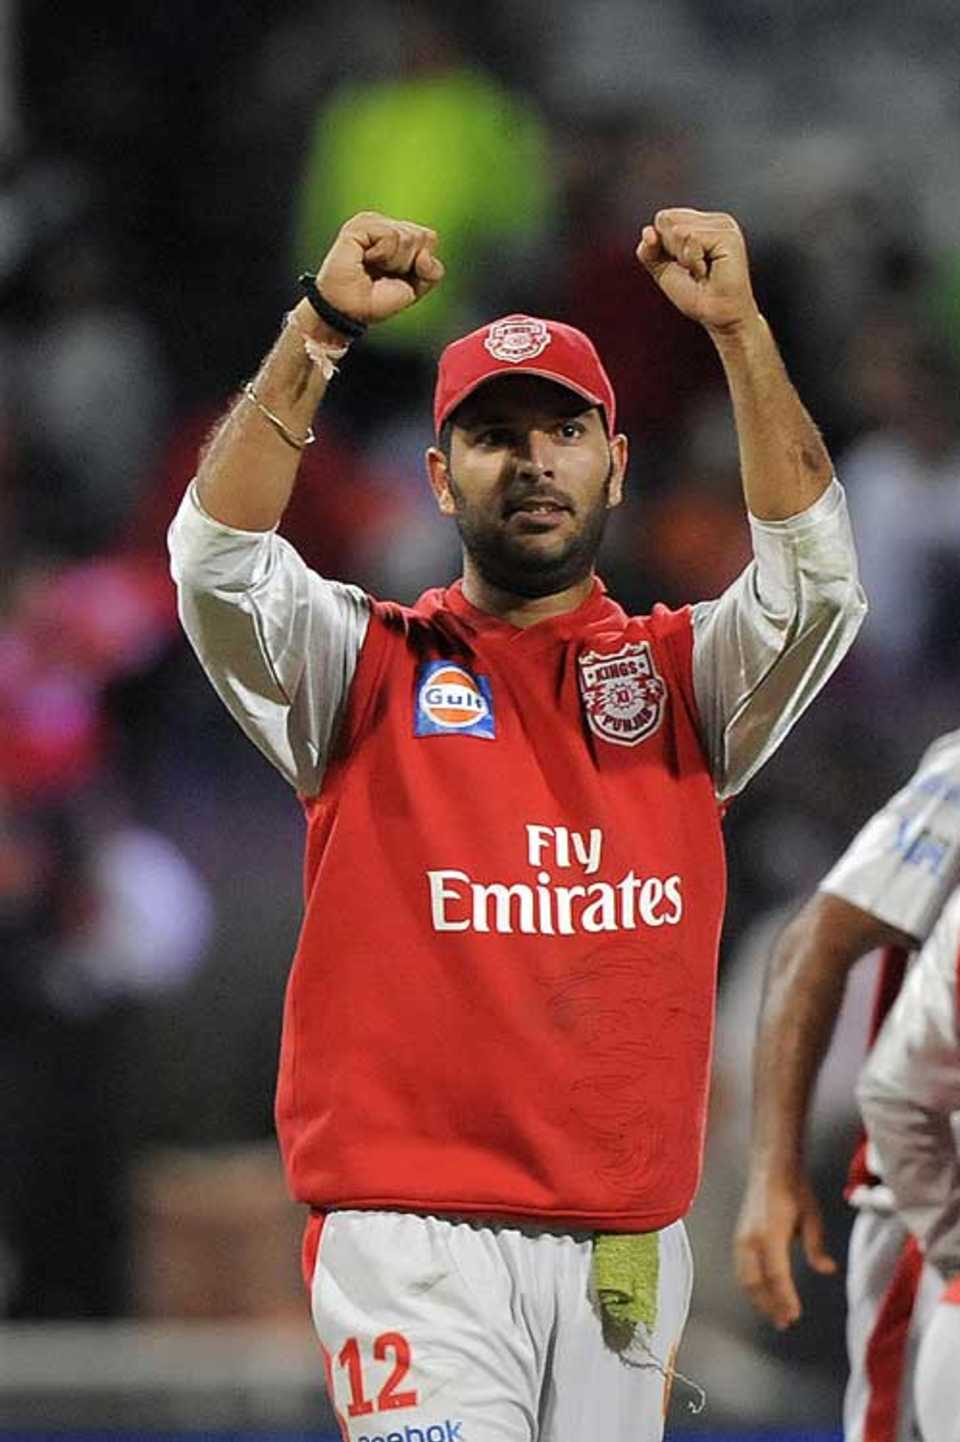 Reason for Yuvraj Singh to celebrate as Kings XI Punjab win their second, Rajasthan Royals v Kings XI Punjab, Cape Town, April 26, 2009